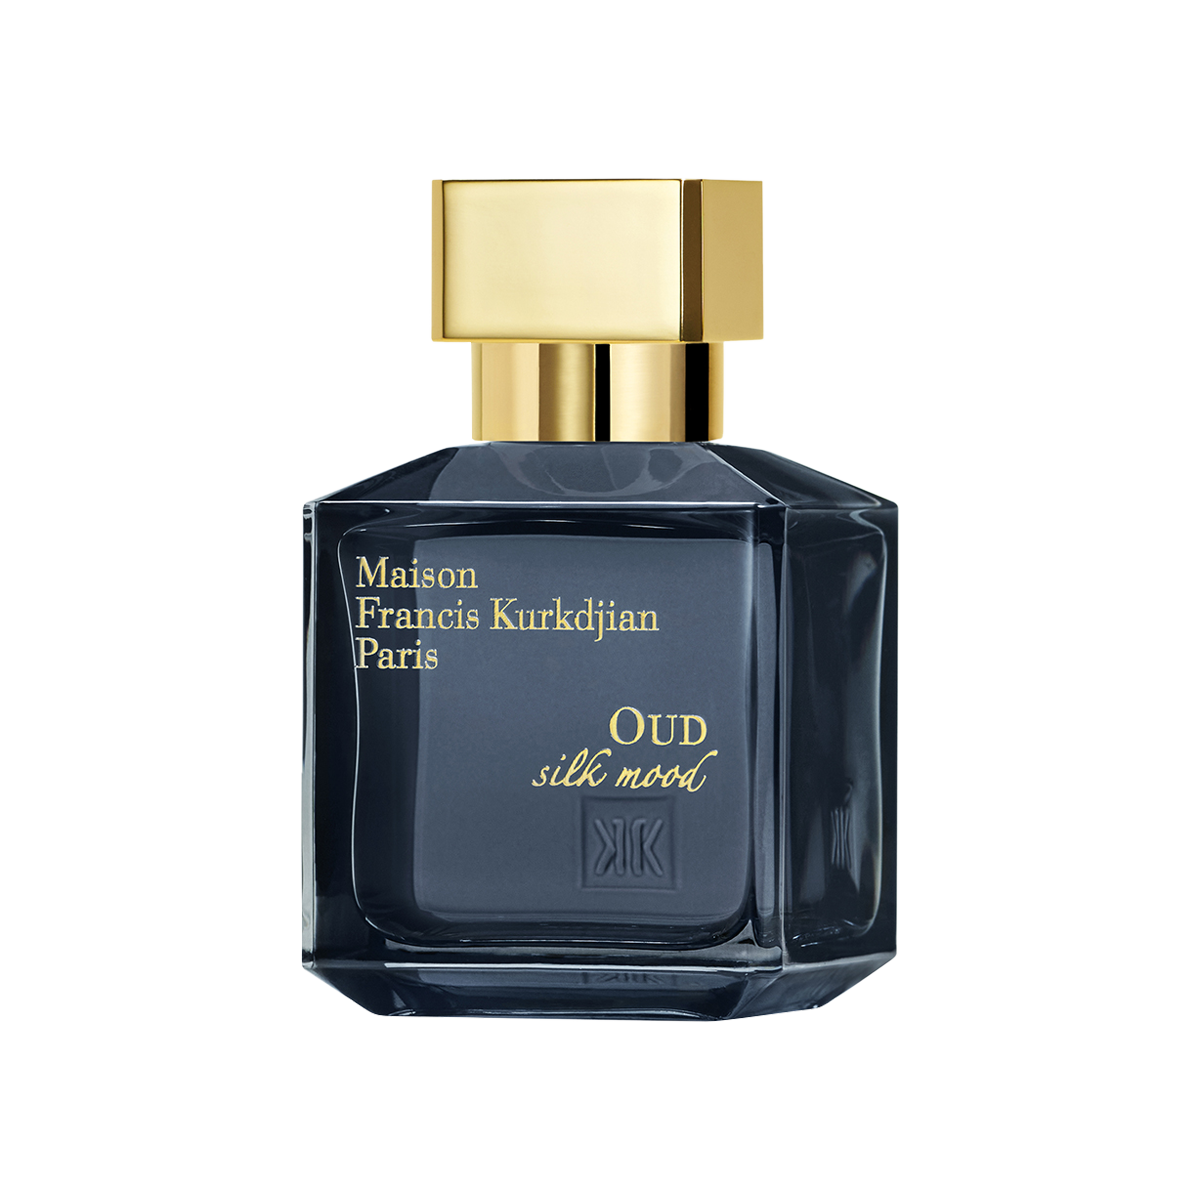 Maison Francis Kurkdjian - Oud Silk Mood Eau de Parfum